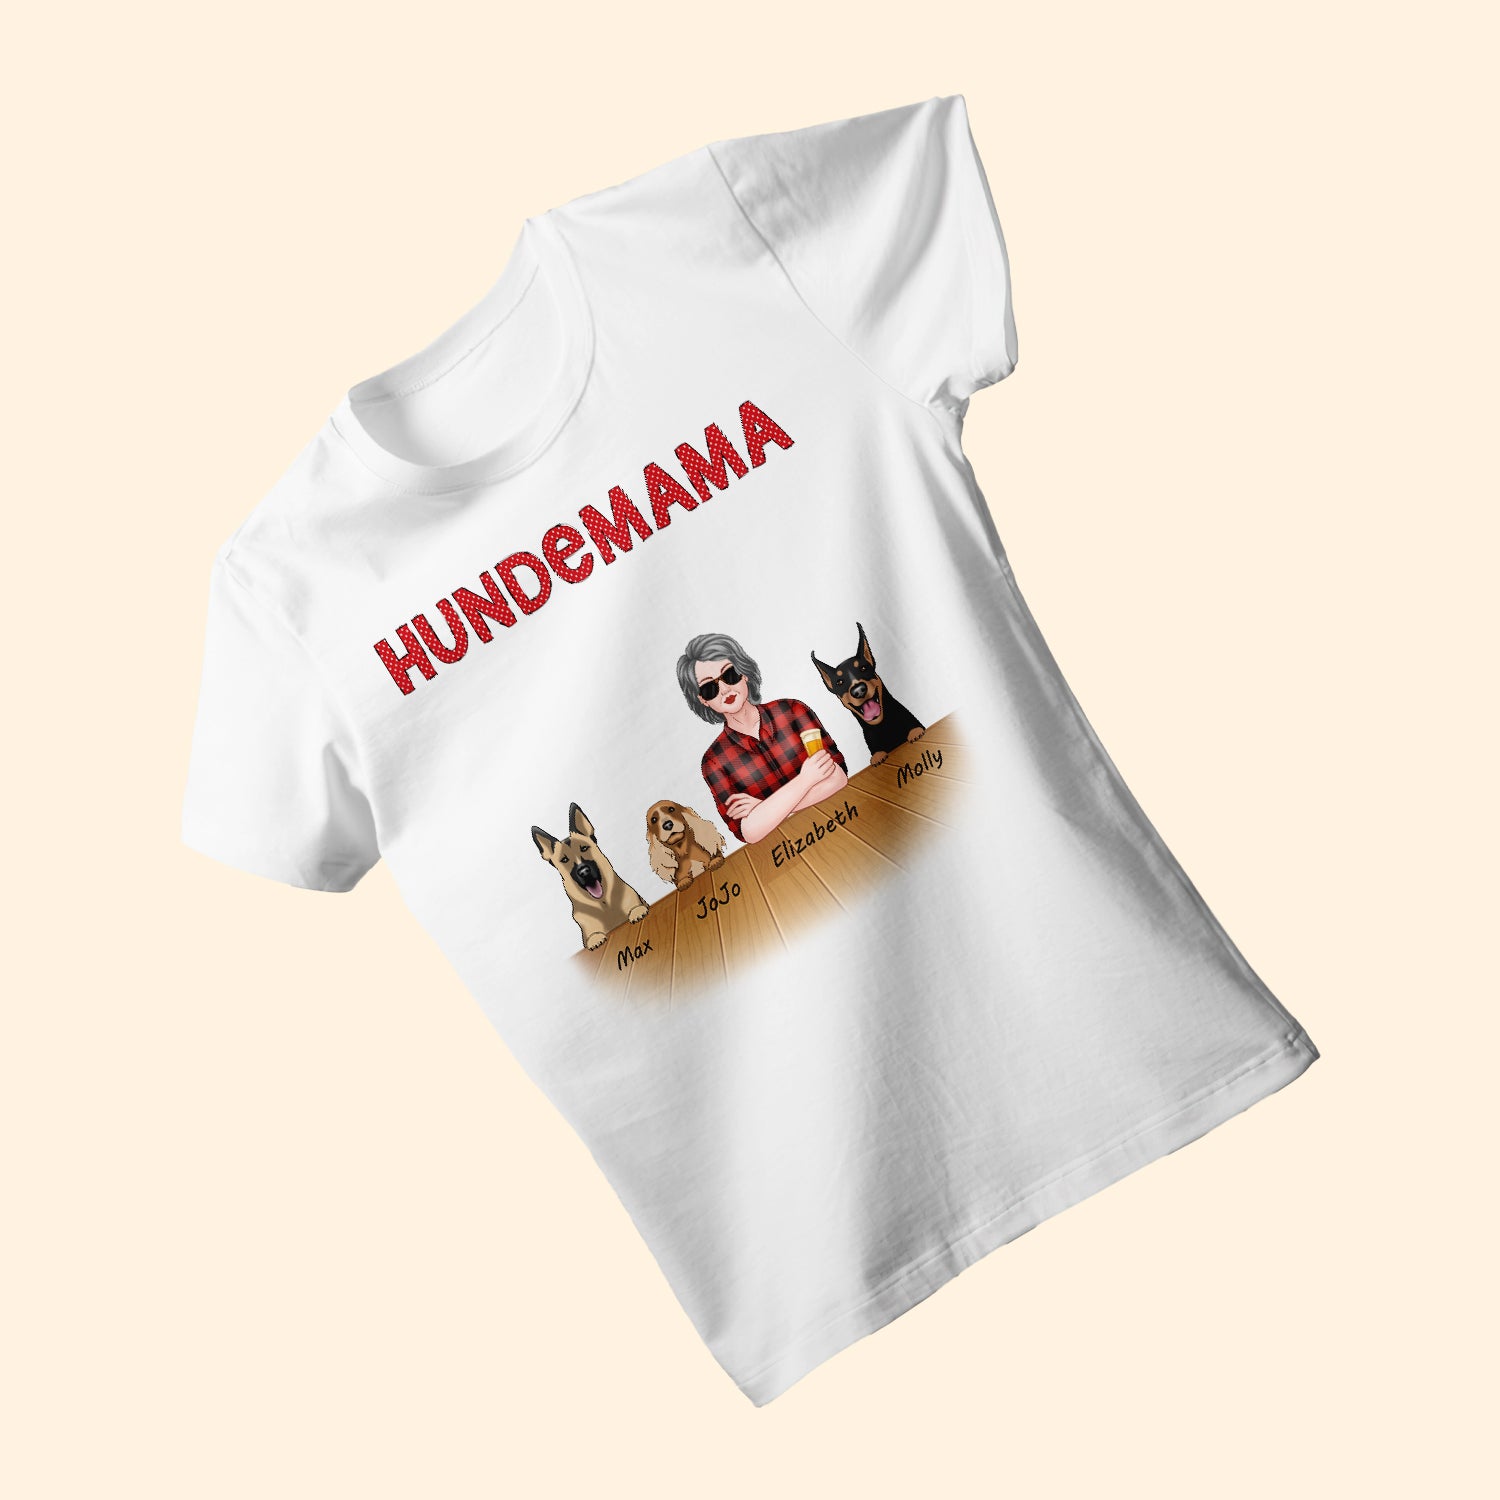 Hundemama - Personalisierte T-Shirt Für Mama